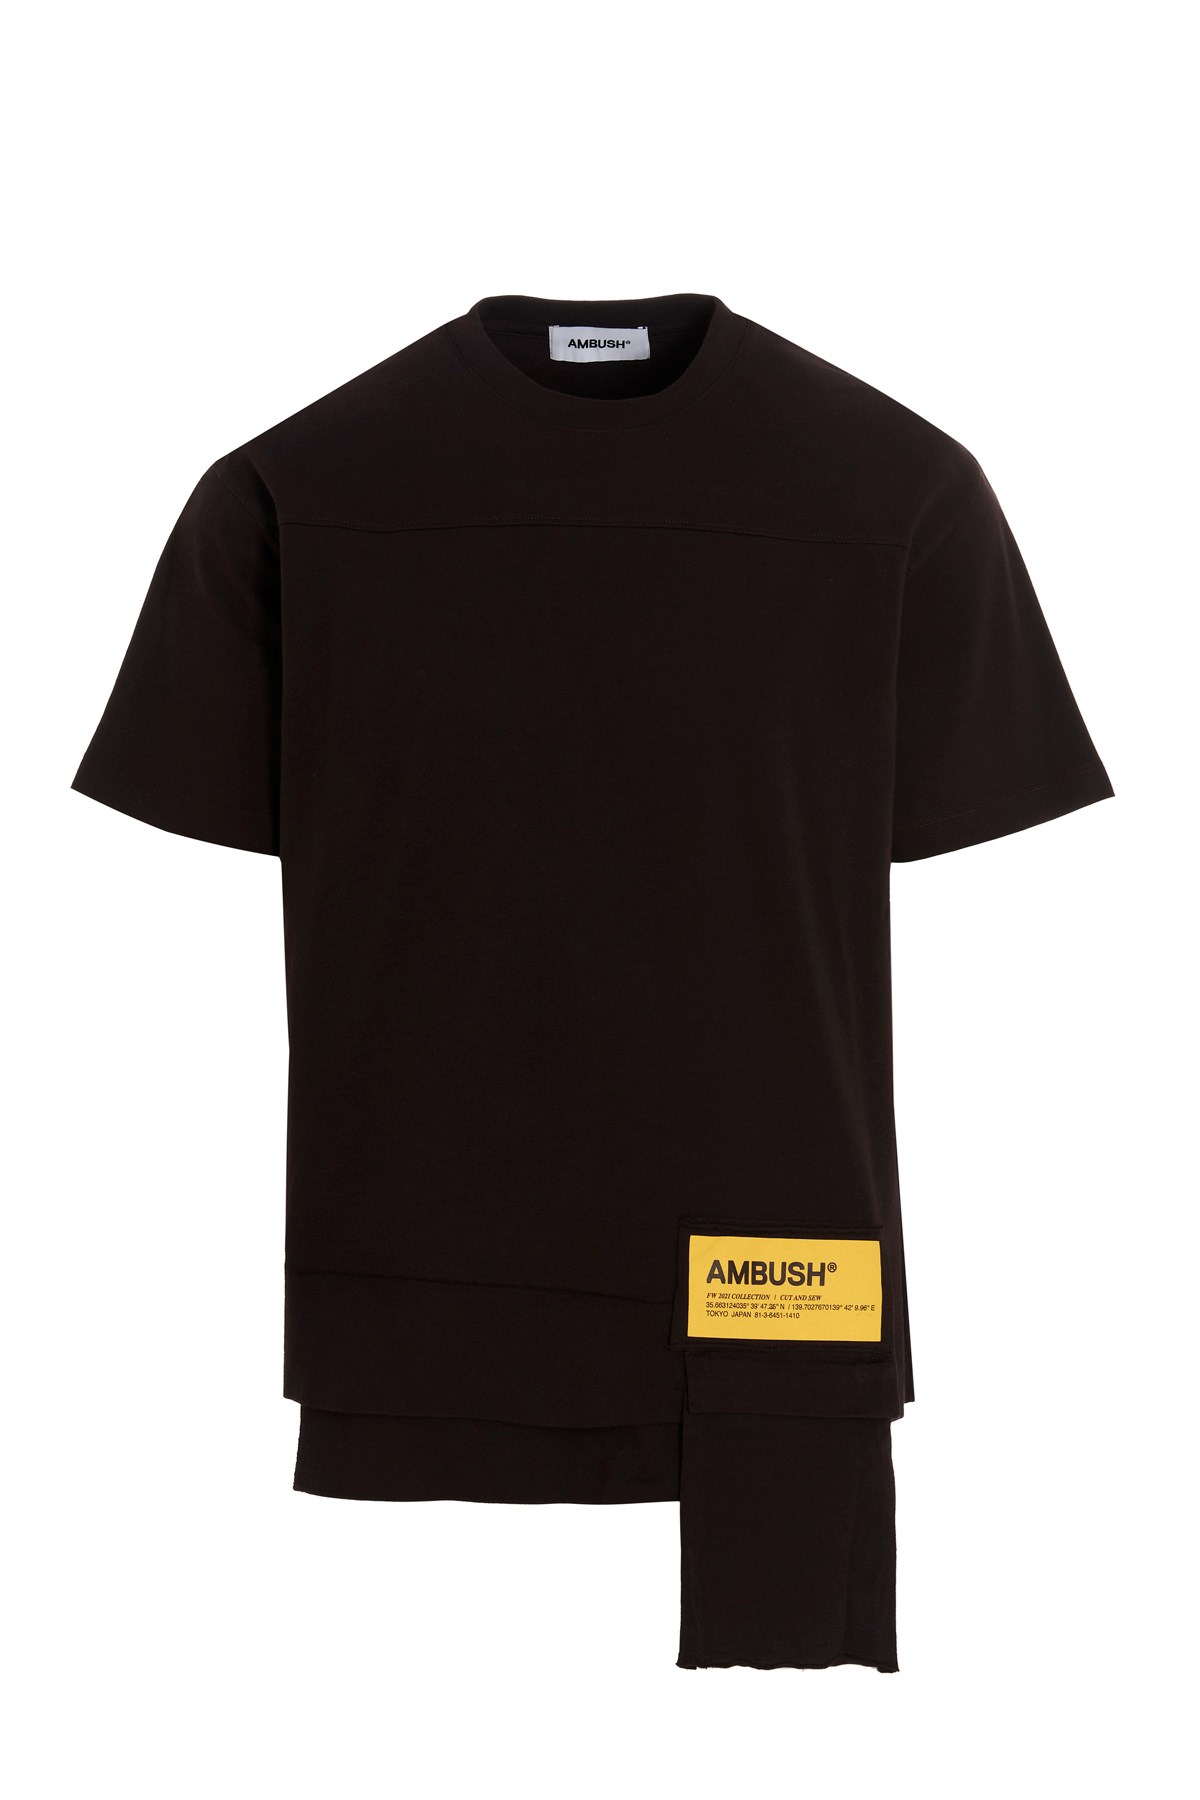 AMBUSH 'Waist Pocket’ T-Shirt